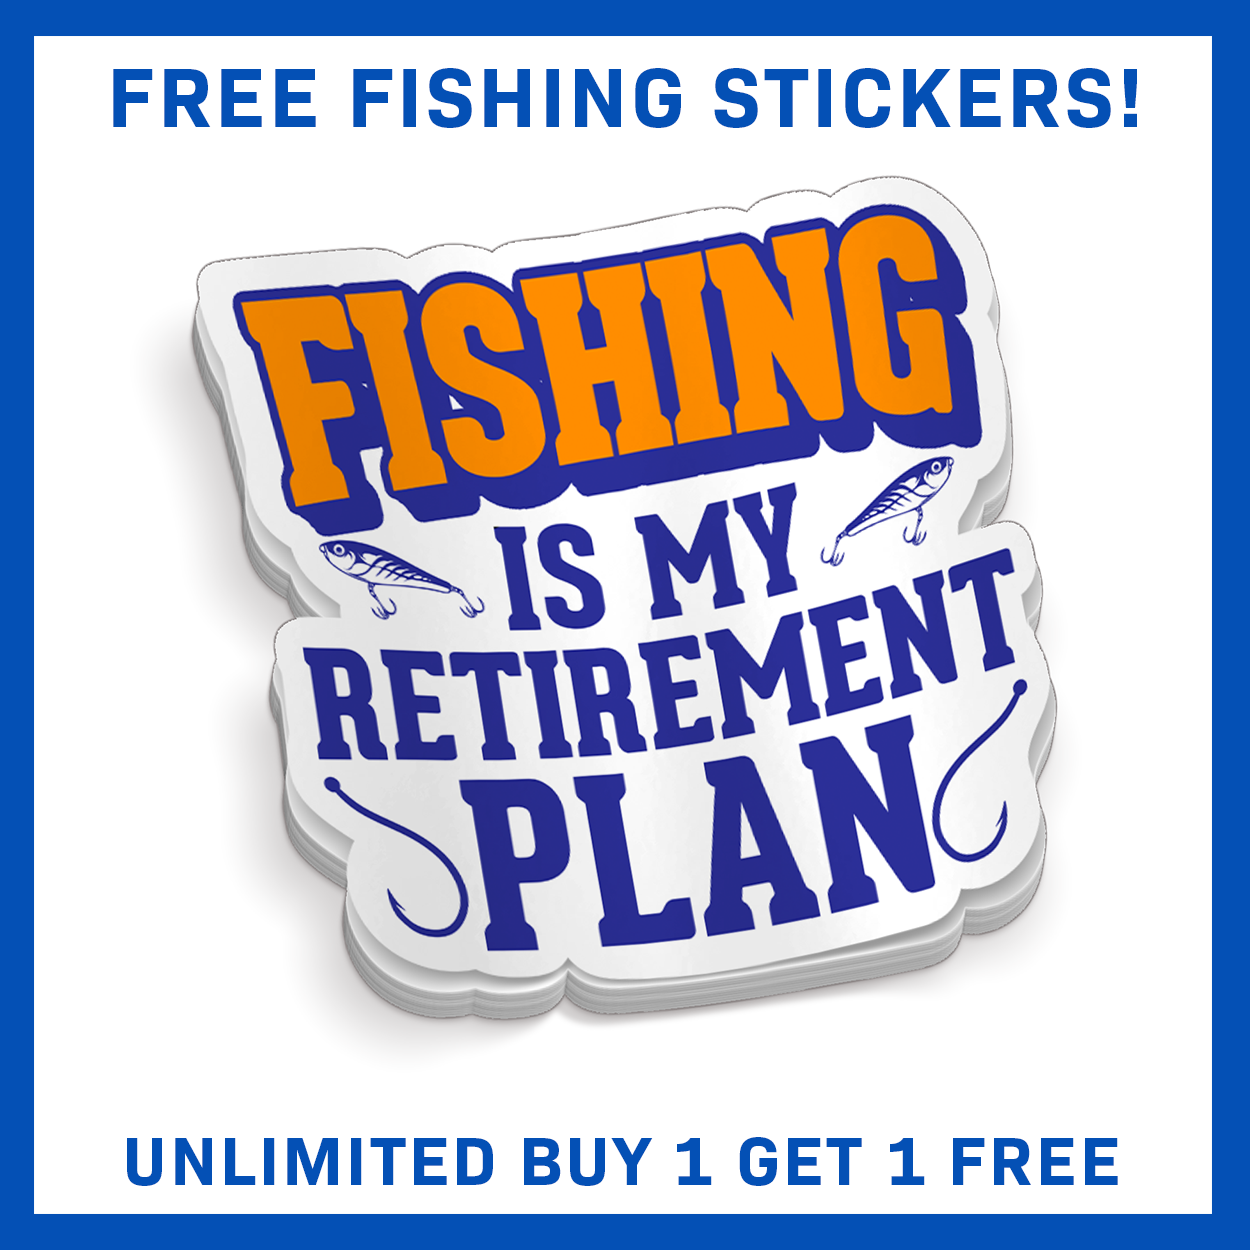 Fishing Is My Retirement Plan - Funny Fishing Sticker